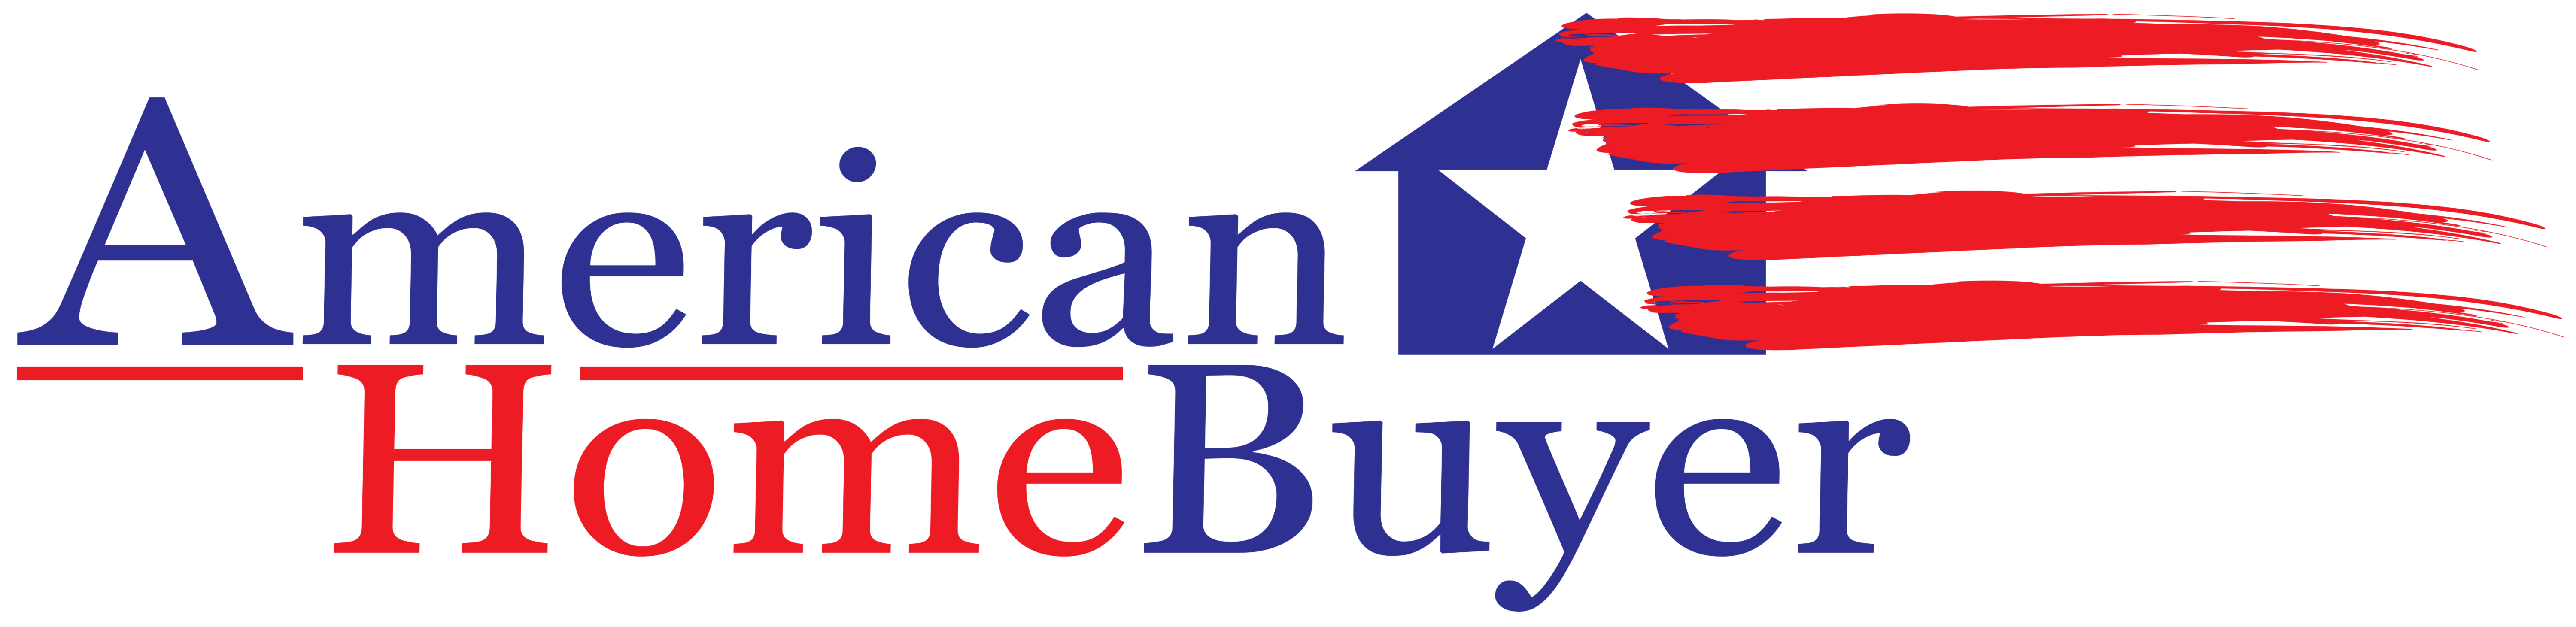 American Home Buyer  logo